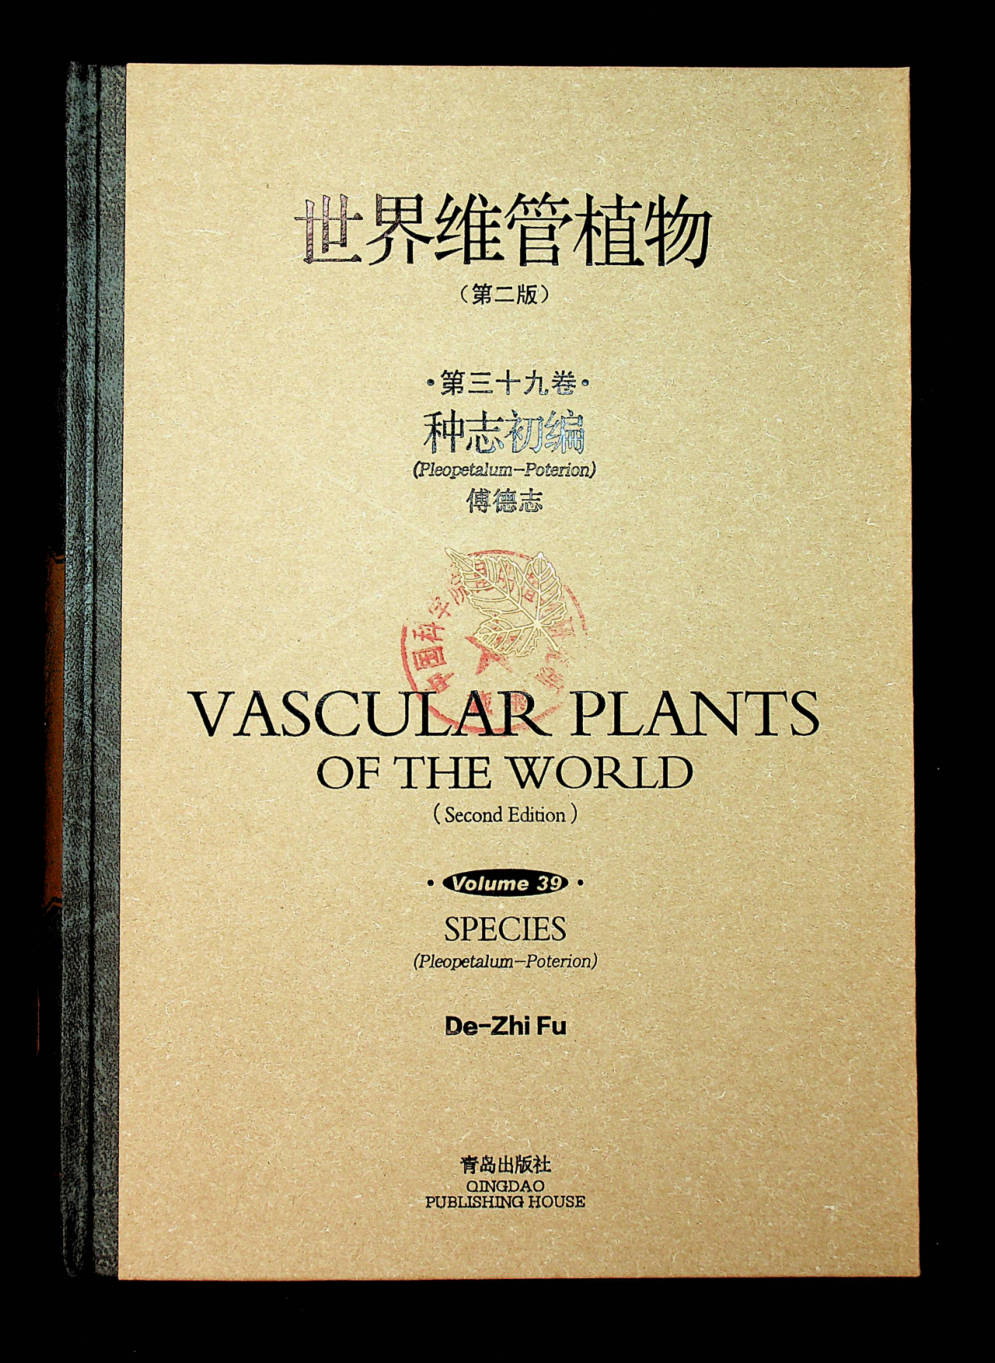 世界维管植物 第二版 第三十九卷 种志初编 (Pleopetalum — Poterion)  VASCULAR PLANTS OF THE WORLD (Second Edition) Volume 39 SPECIES (Pleopetalum — Poterion)